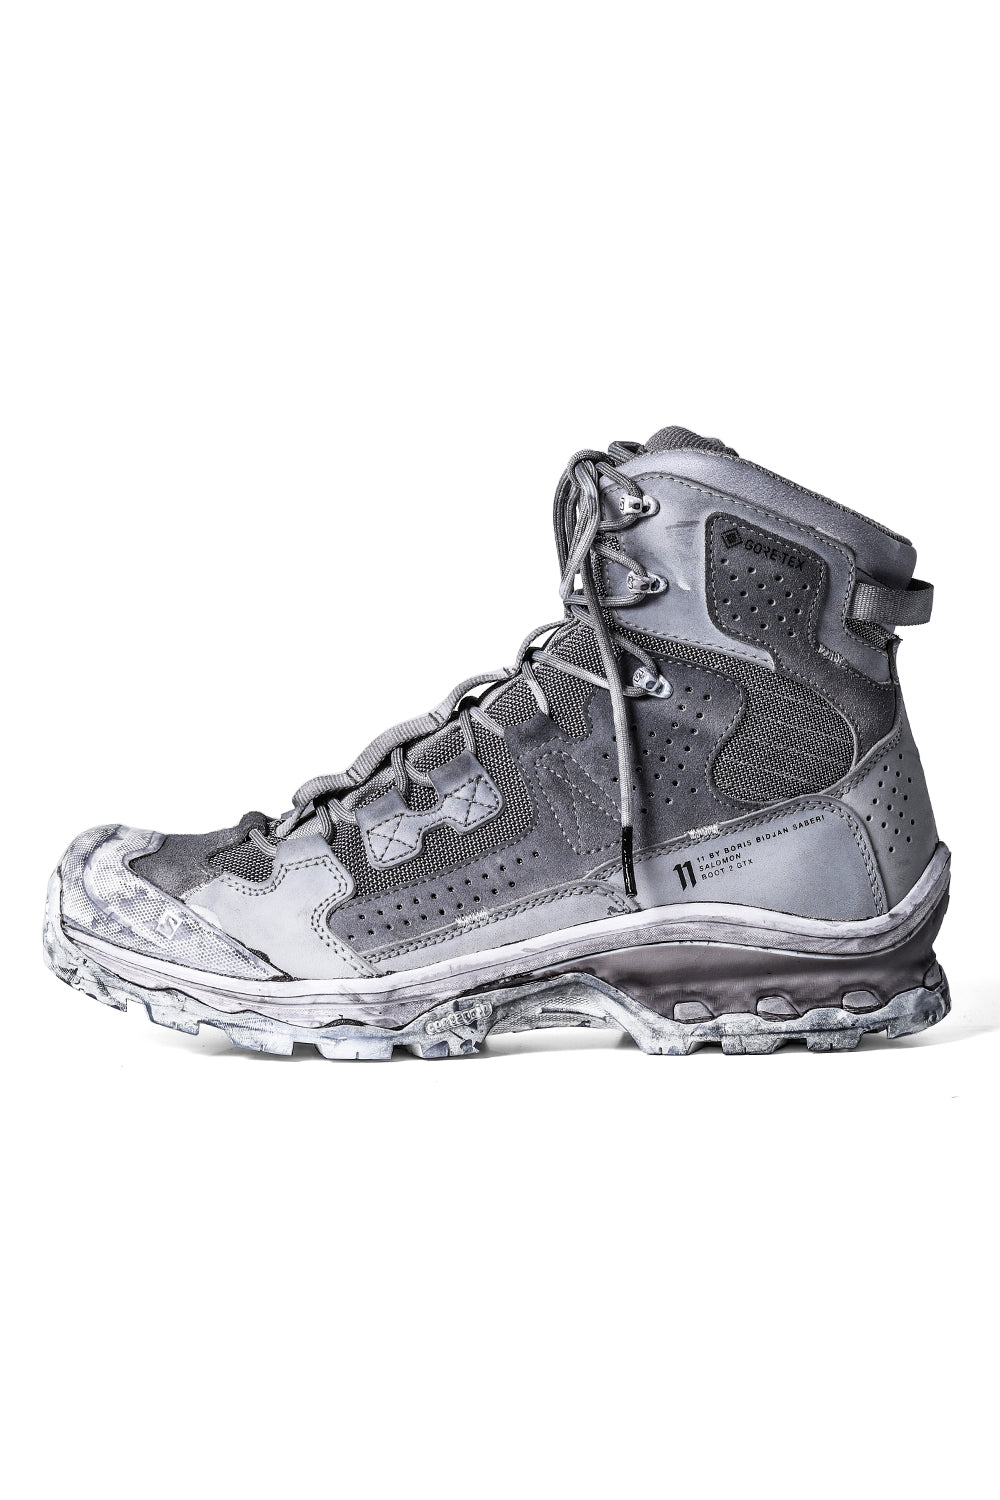 boots2-gtx-light-grey-026 | ブーツ2 ゴアテックス ライトグレー 026